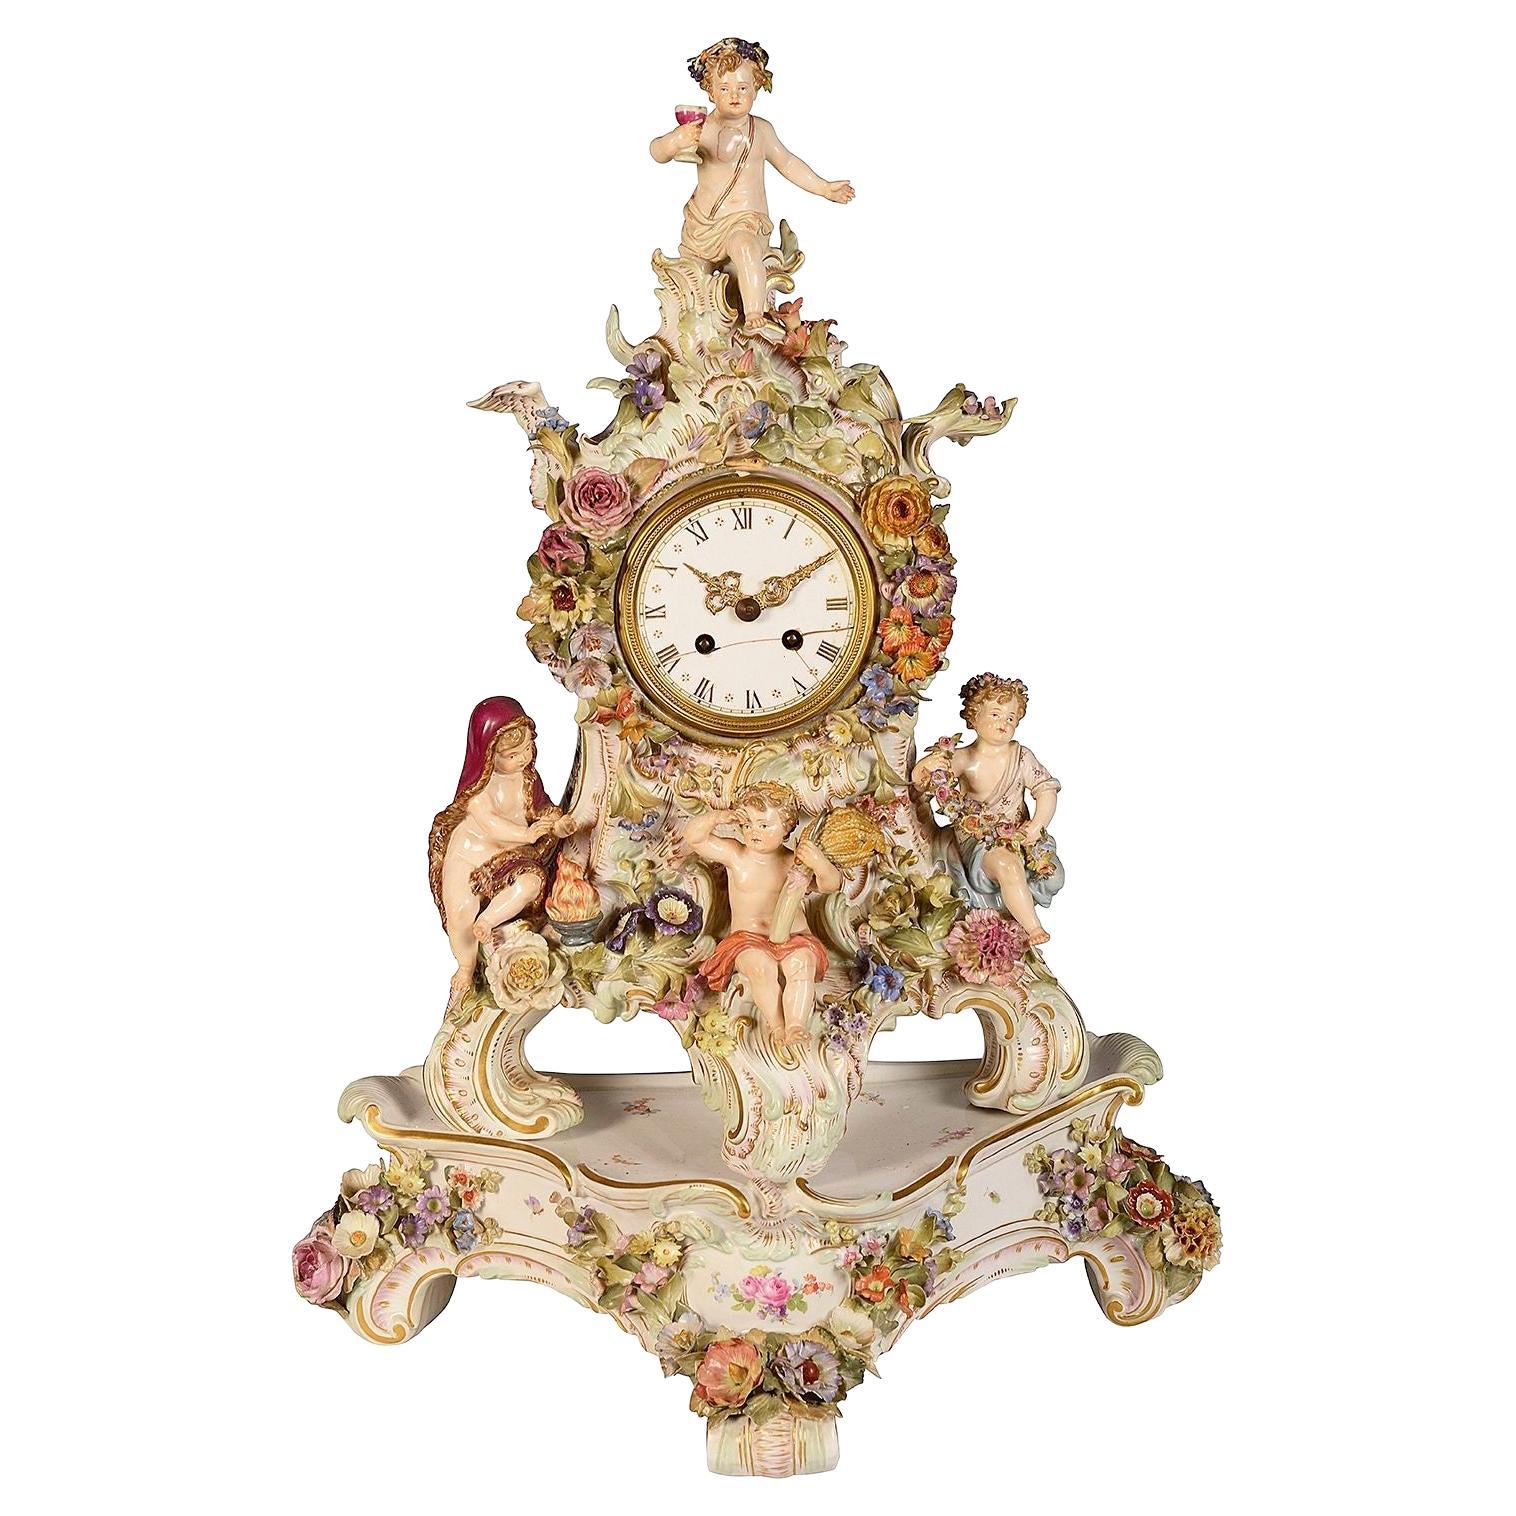 19th Century Meissen clock depicting the four seasons.